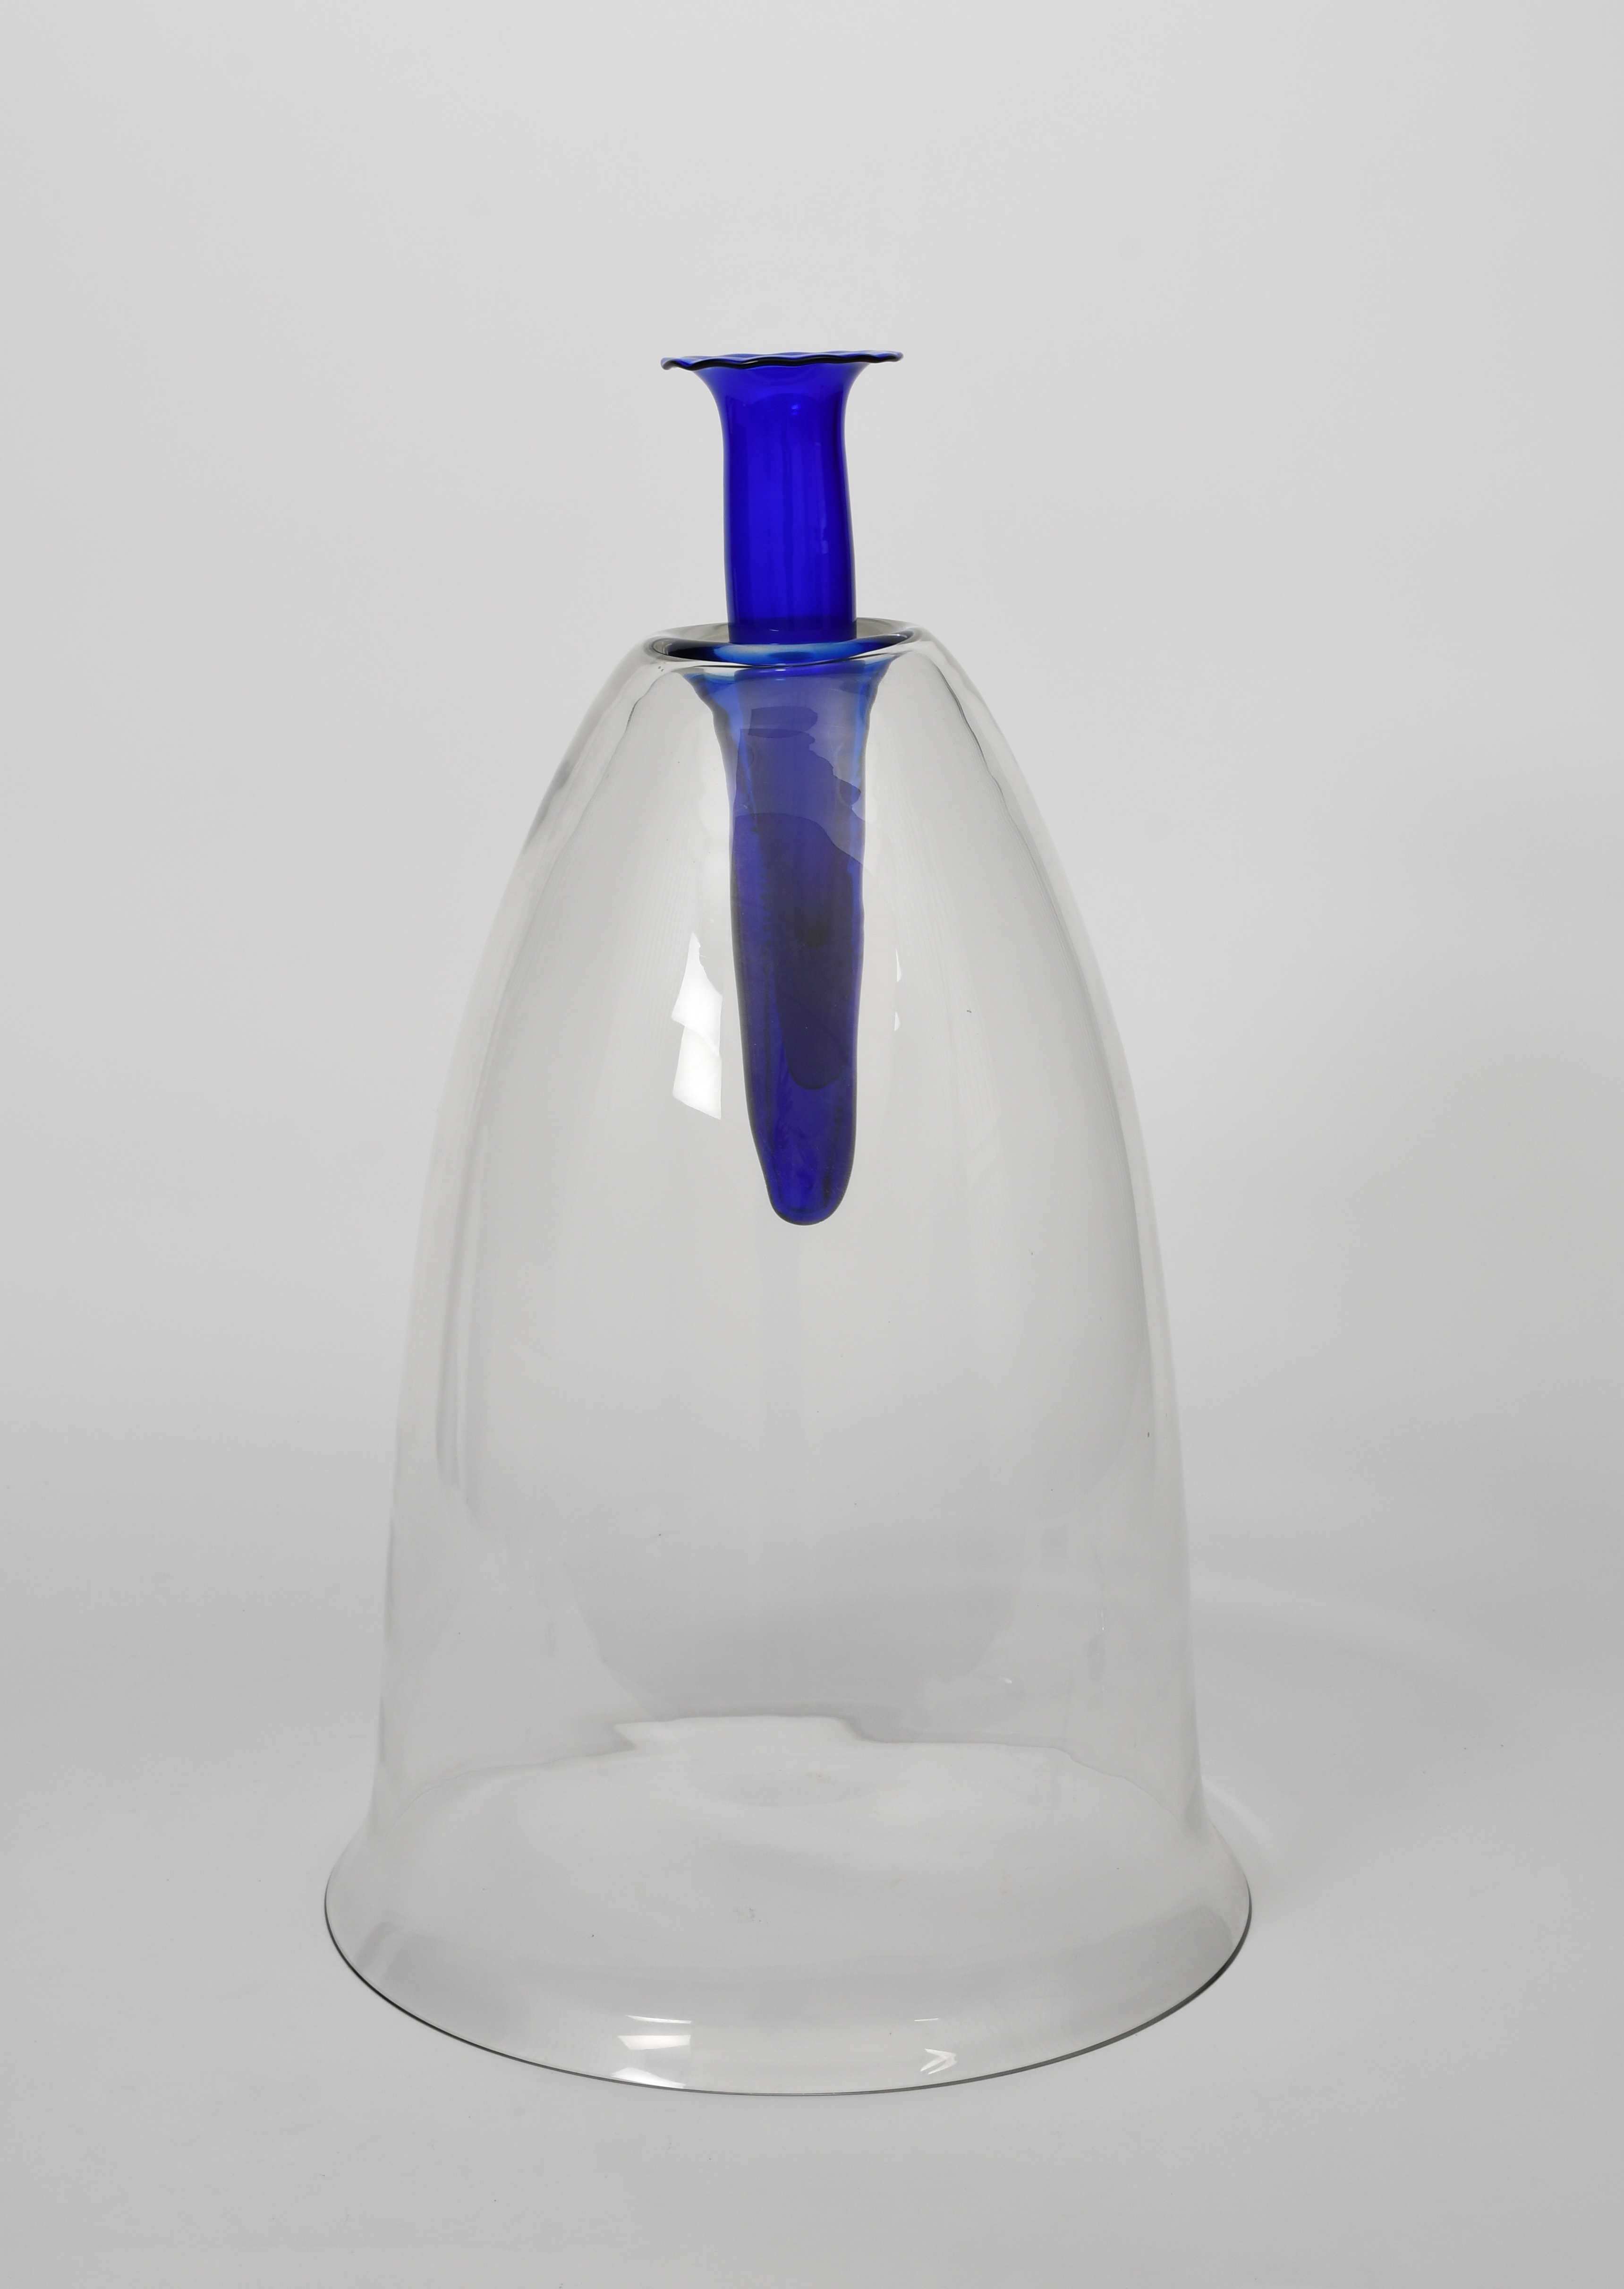 Philippe | Vase En Modele Garnier a Daum glass vase | MutualArt